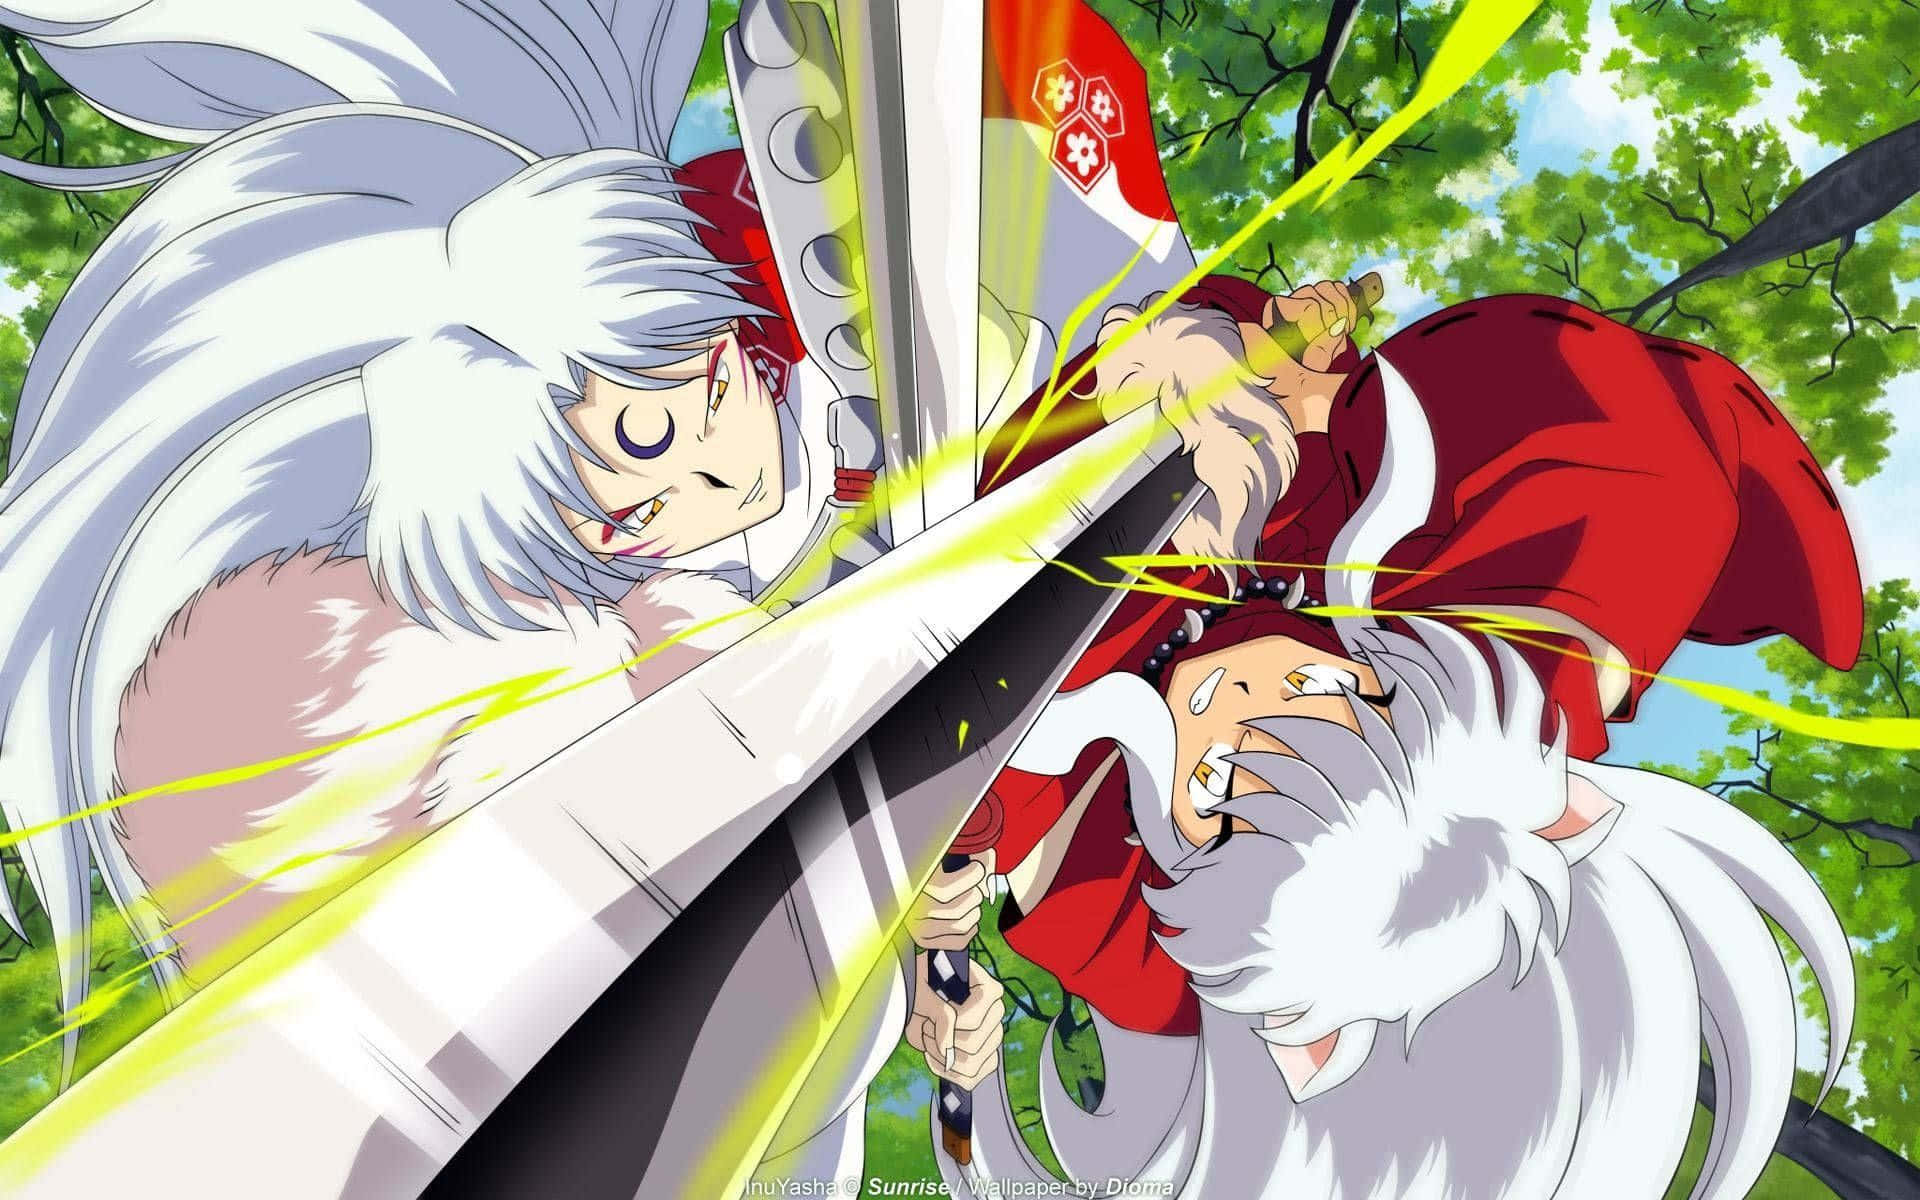 Inuyasha and Sesshomaru face off in an intense battle Wallpaper